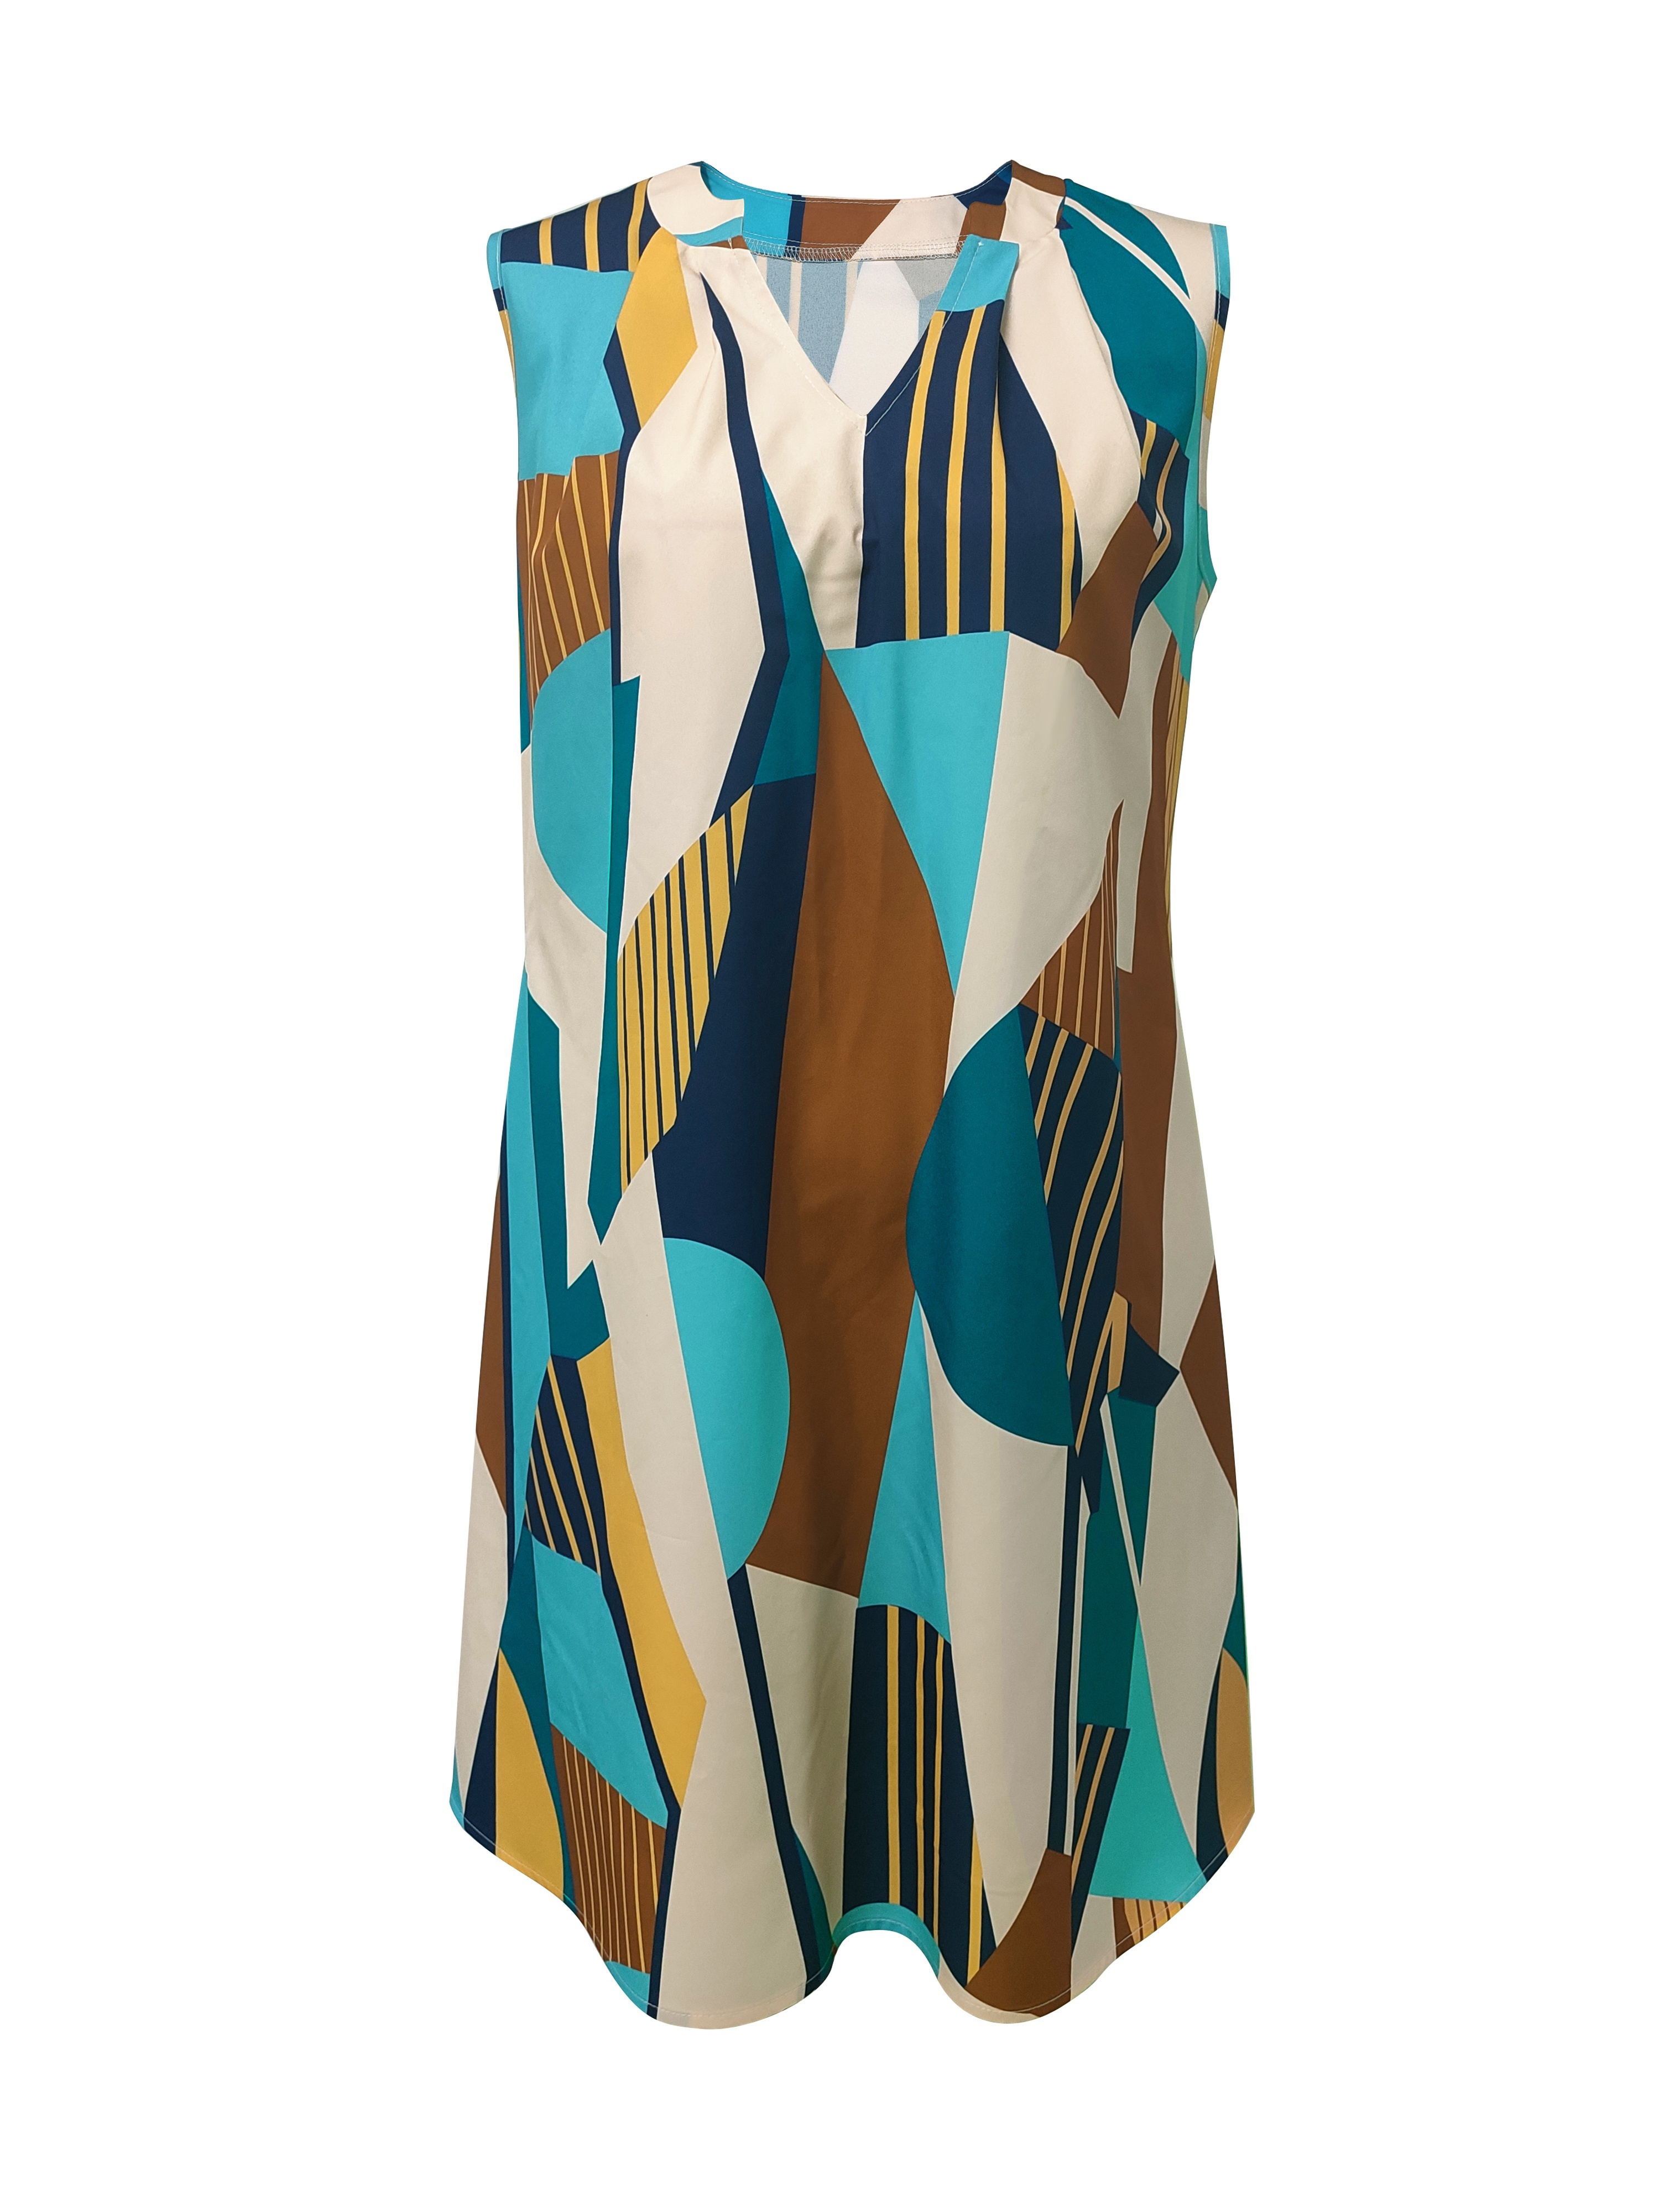 abstract ripple print dress casual v neck sleeveless dress womens clothing details 12